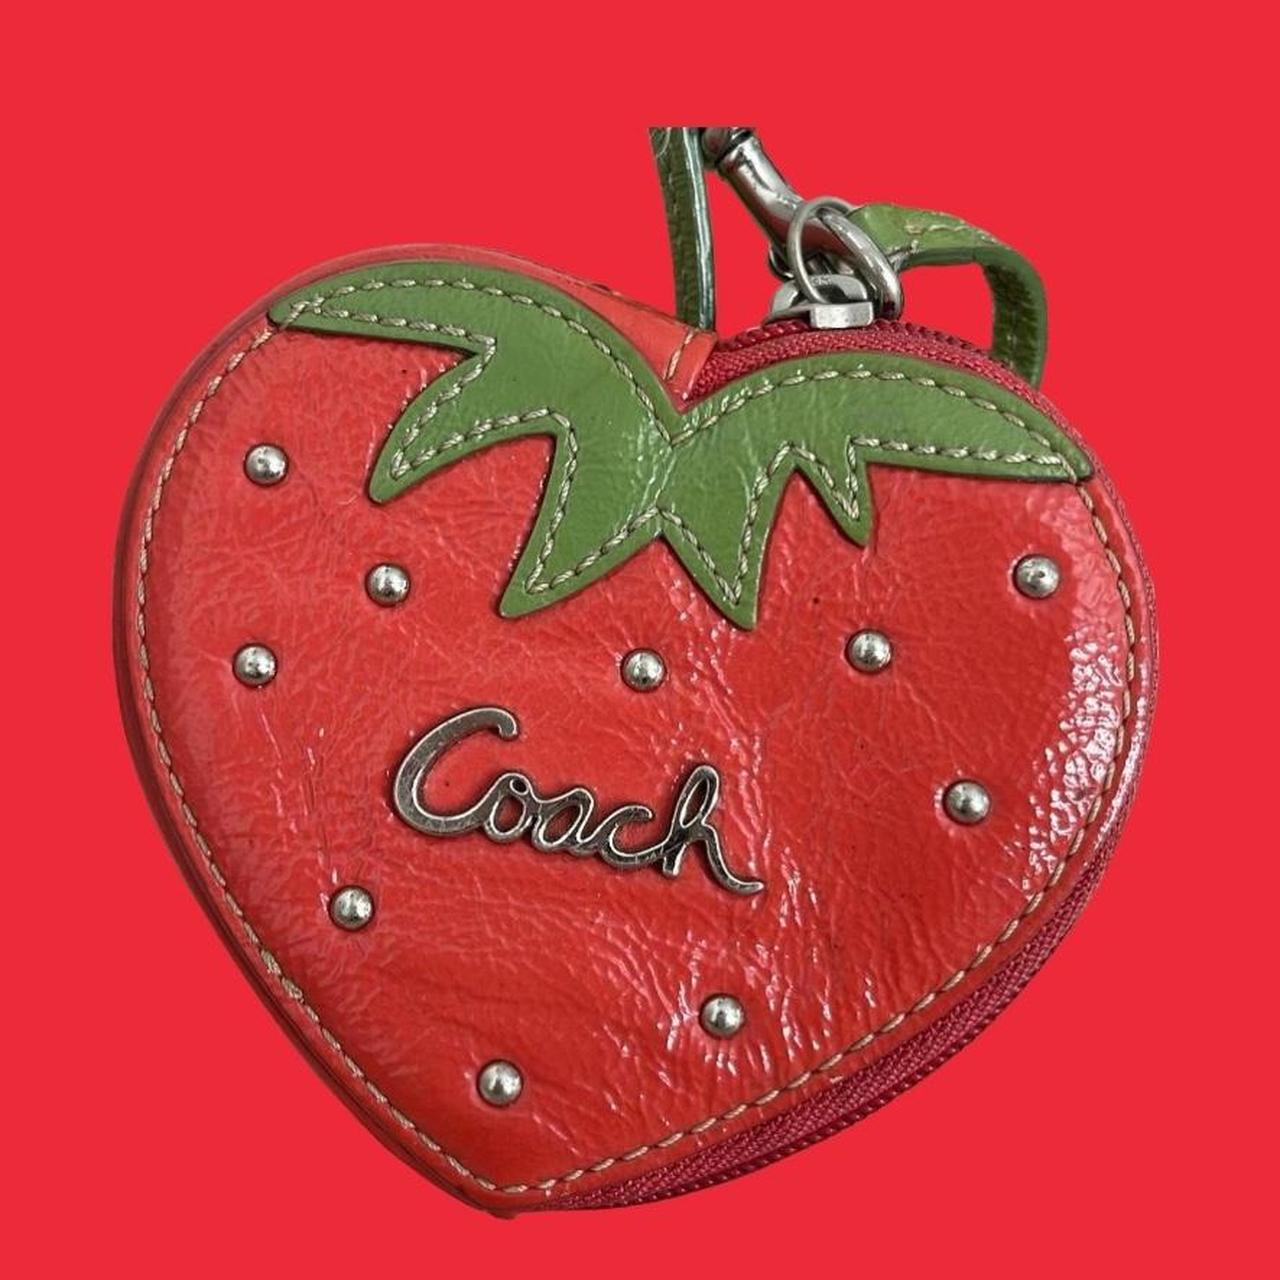 Vintage coach strawberry wallet - Depop